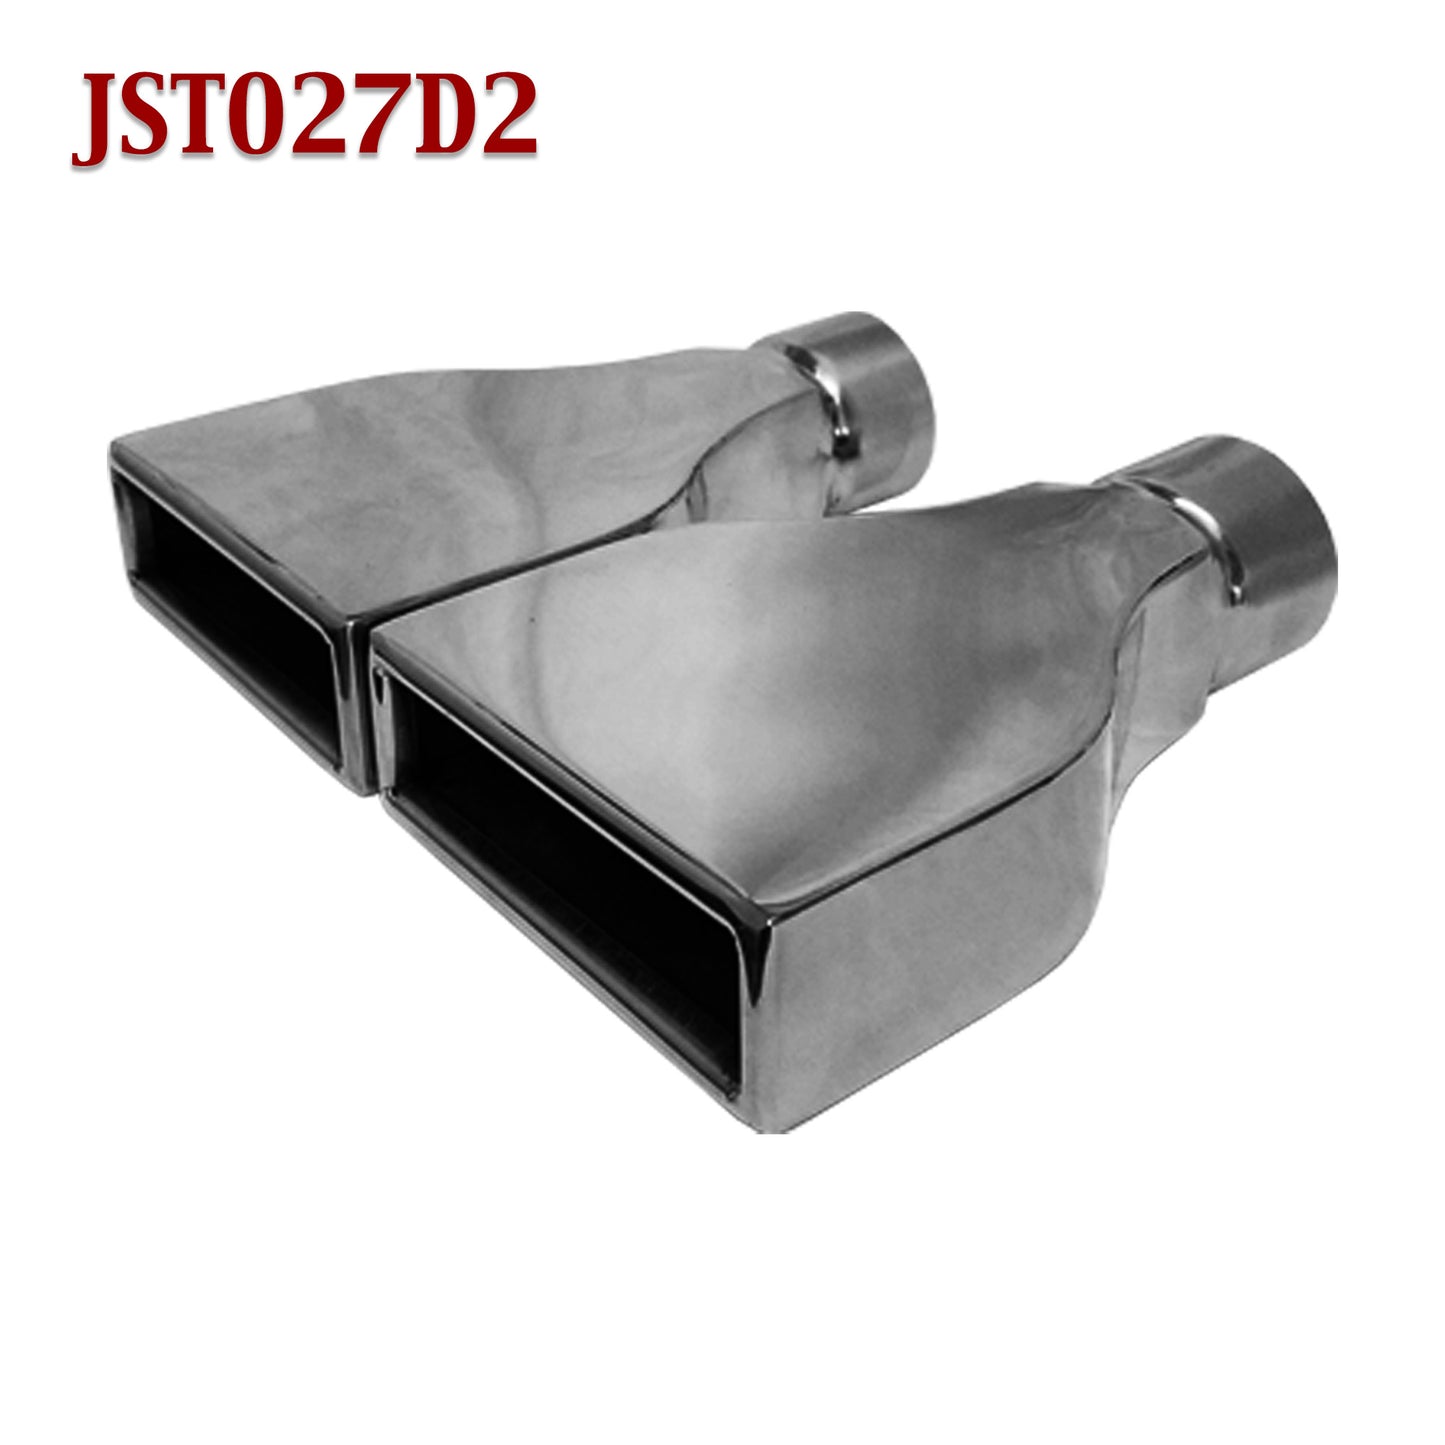 JST027D2 2.5" Black Chrome Rectangle Camaro Exhaust Tip 2 1/2" Inlet 6" Wide 9" Long